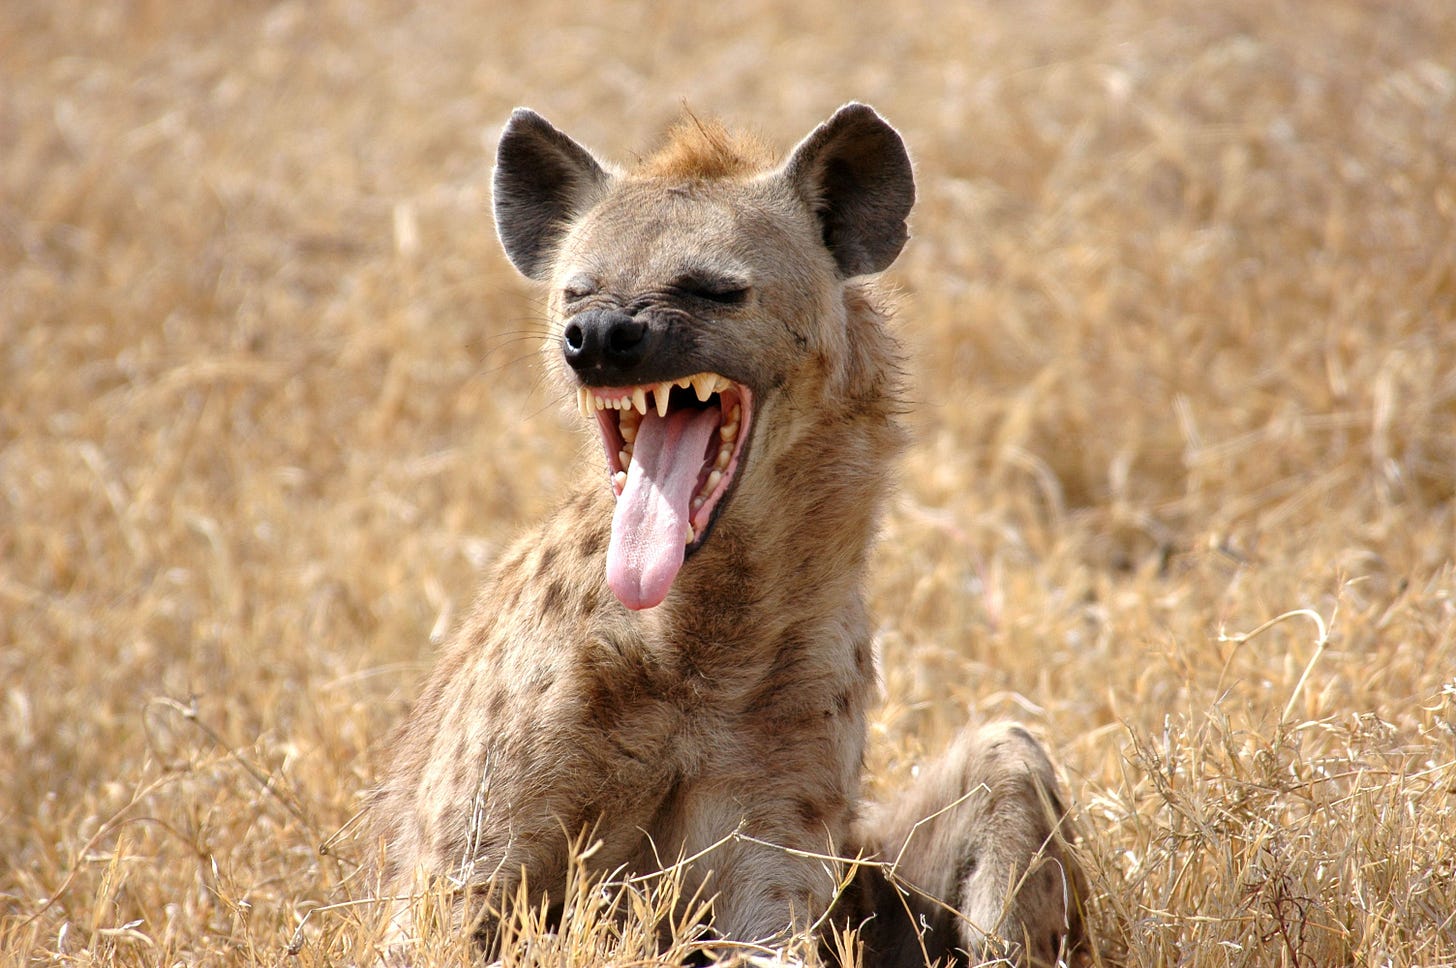 Pin by John Veland on Animals | Lions and hyenas, Hyena, Animals